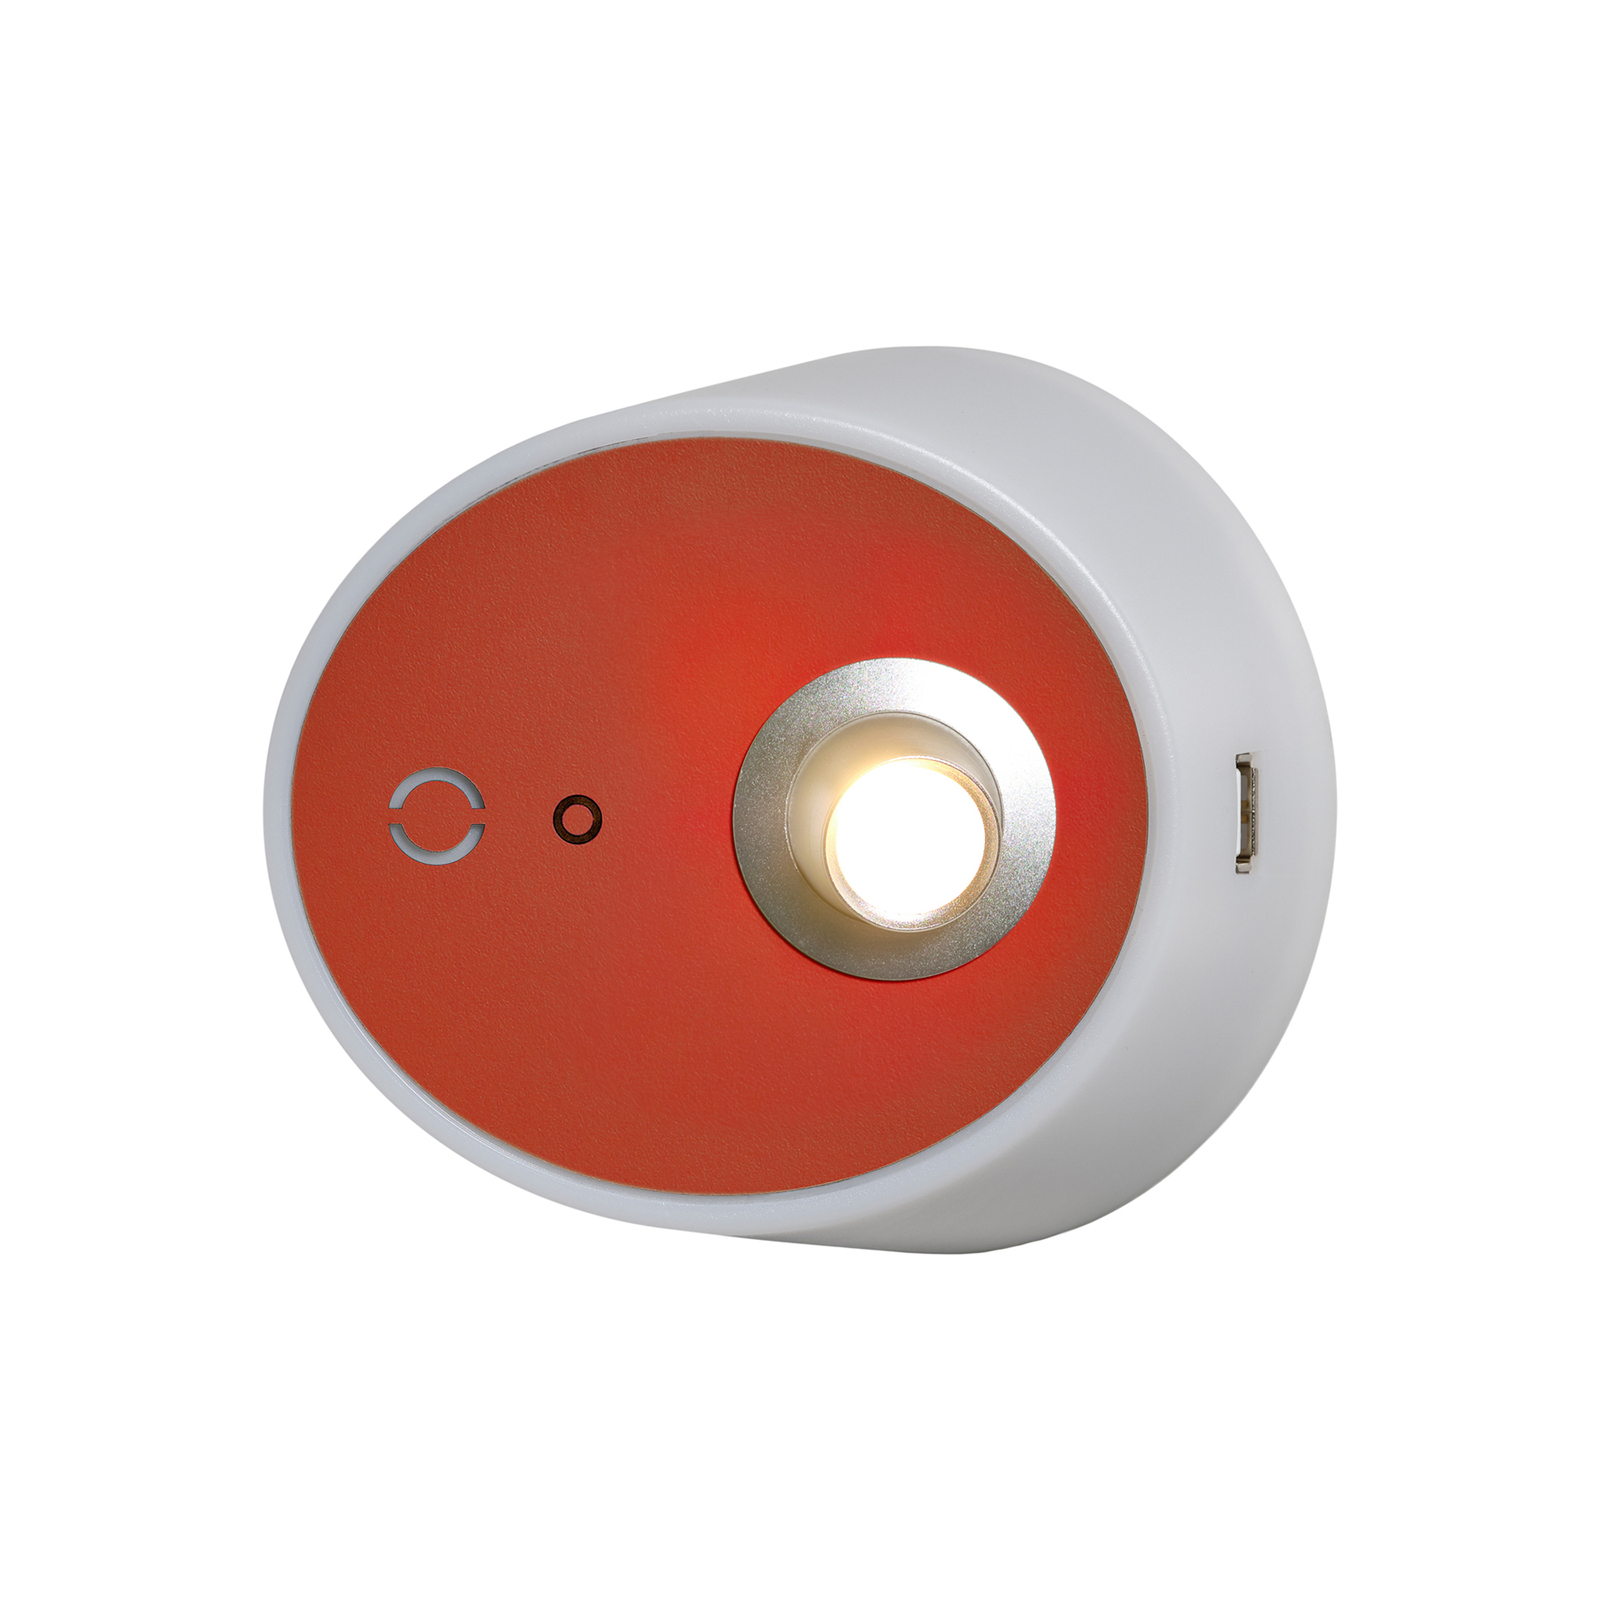 LED wandlamp Zoom, spot, USB-uitgang, terracotta